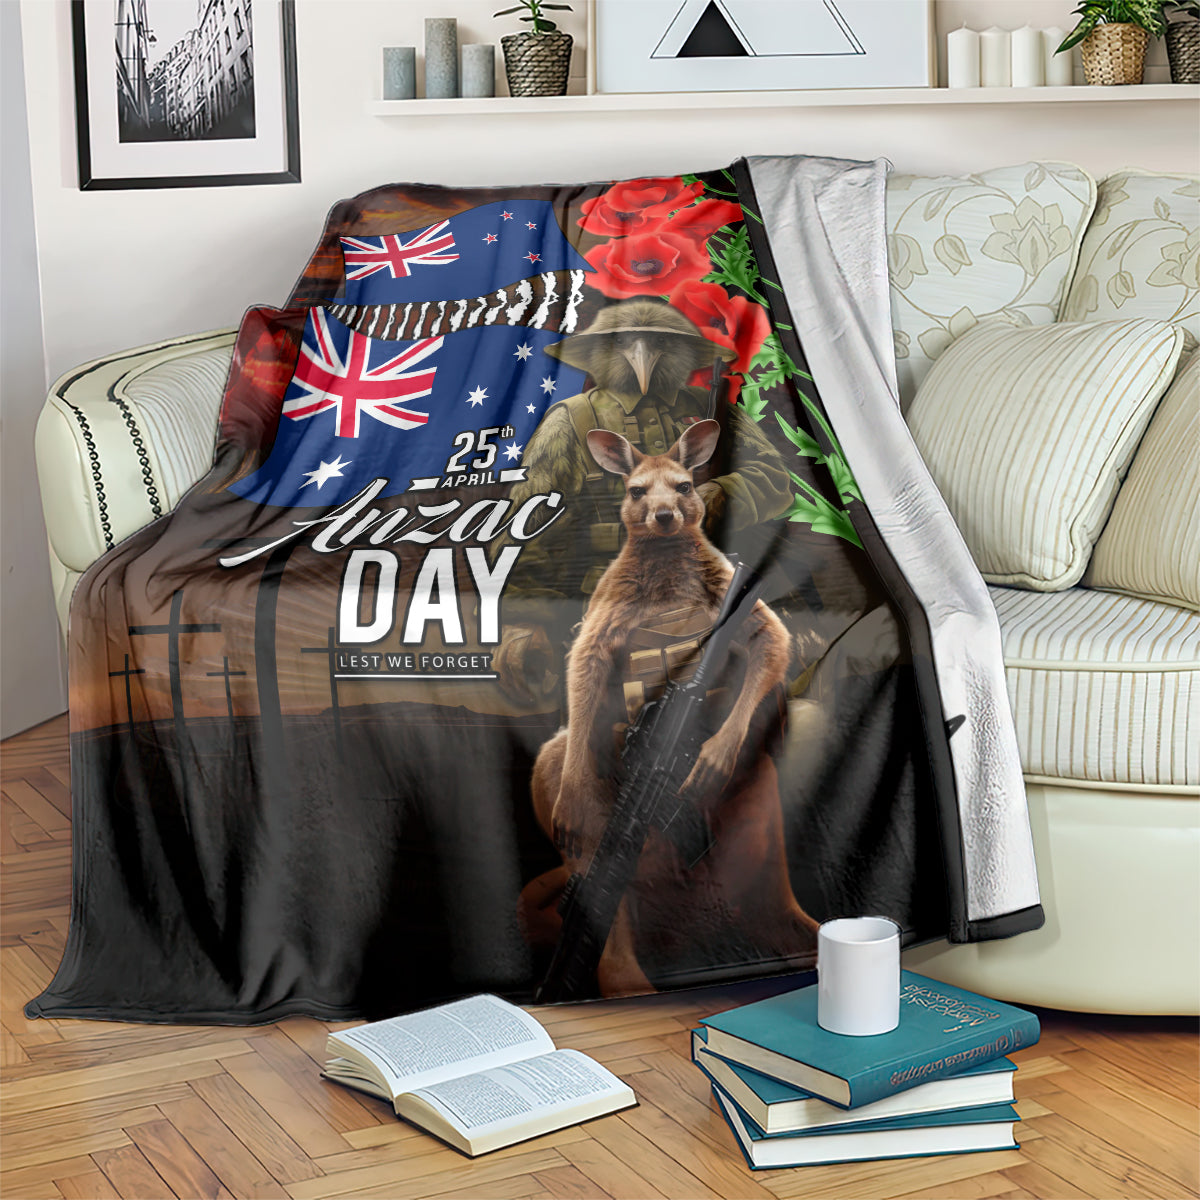 New Zealand and Australia ANZAC Day Blanket National Flag mix Kiwi Bird and Kangaroo Soldier Style